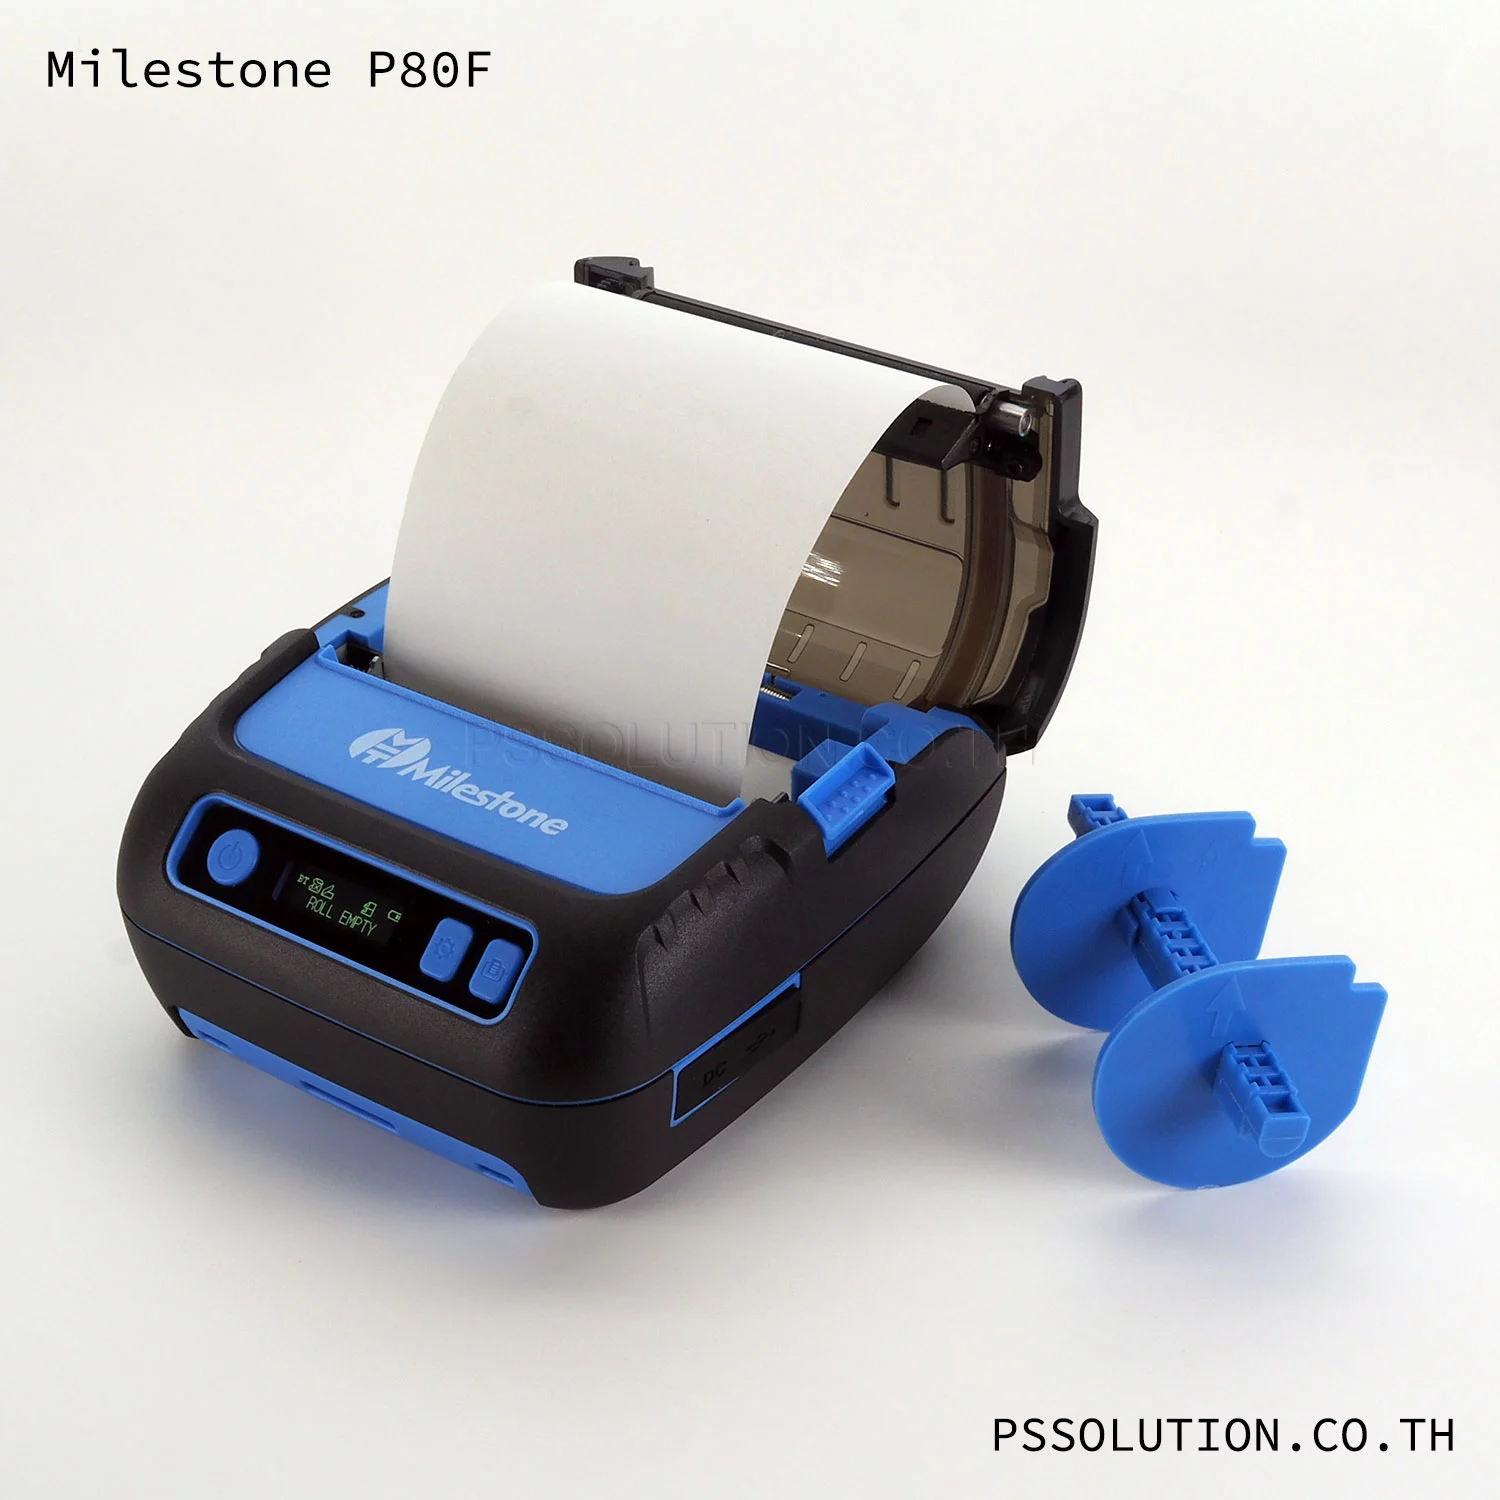 Milestone P80F เครื่องปริ้นใบเสร็จพกพา เครื่องพิมพ์สติกเกอร์พกพา BLUETOOTH พิมพ์จากมือถือ Mobile Printer 80mm-6